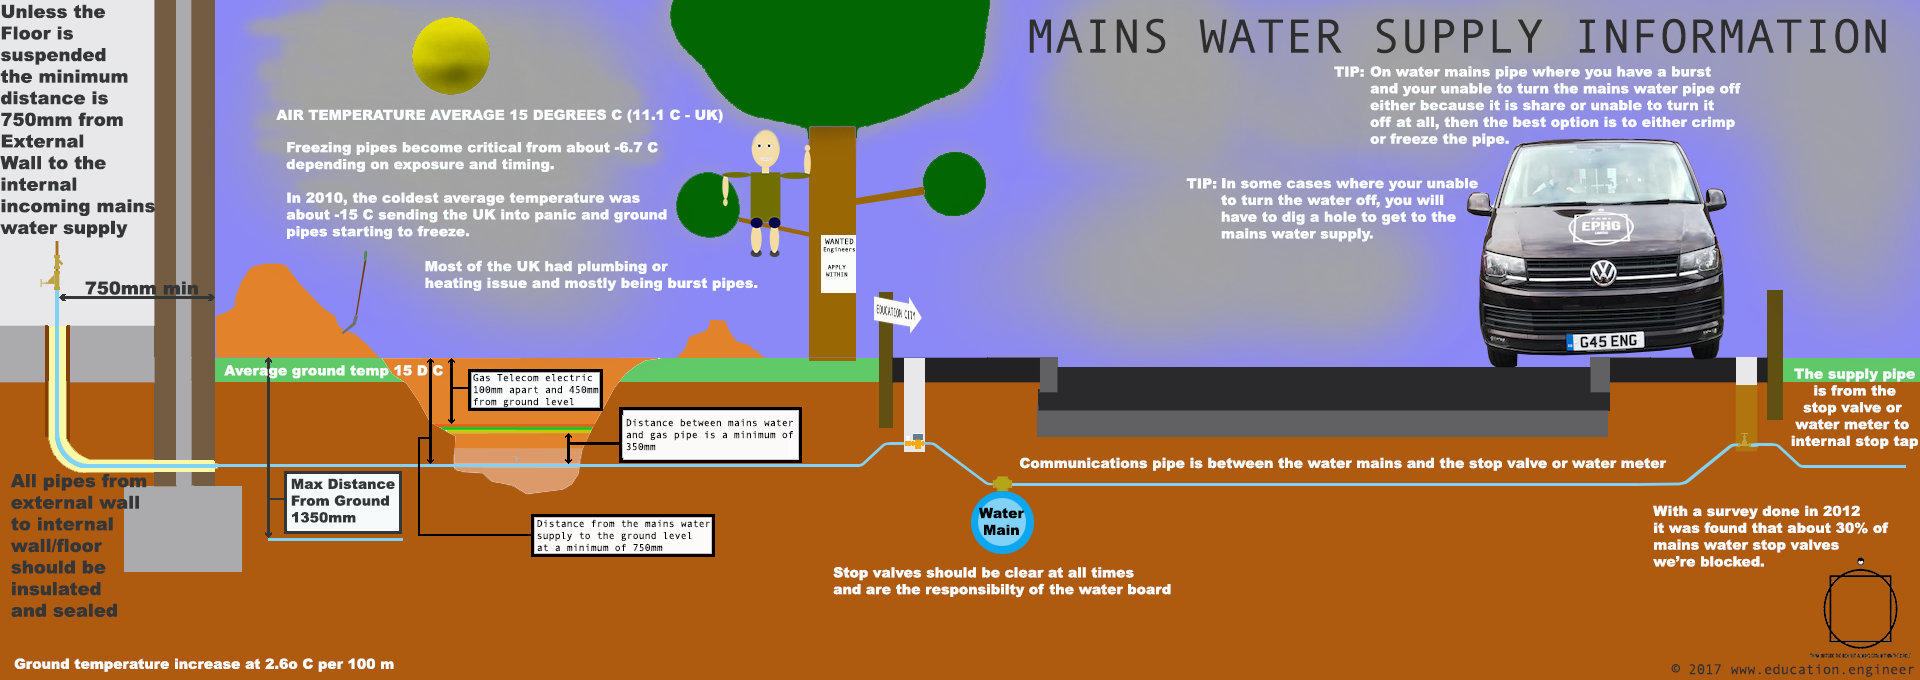 Mains Water Supply